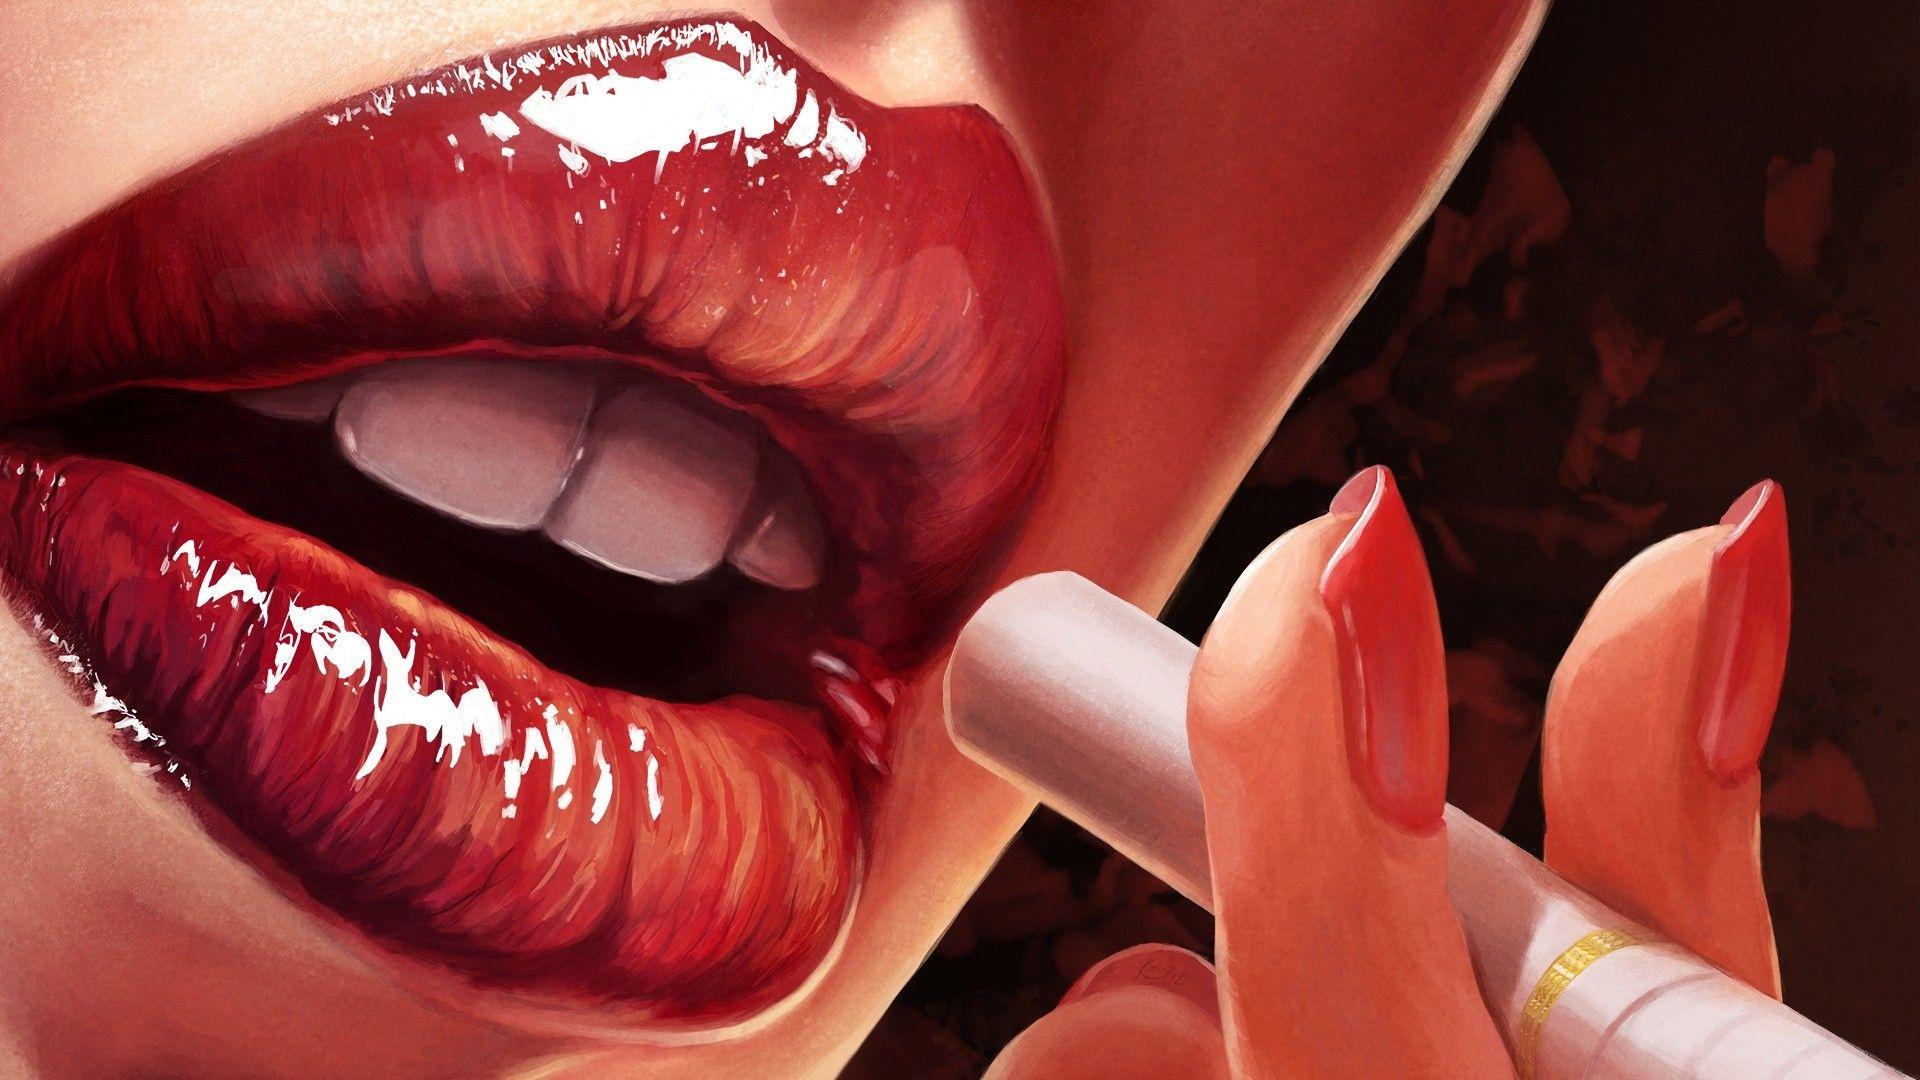 Red Woman Lips And Cigarette HD Desktop Wallpaper, Instagram photo